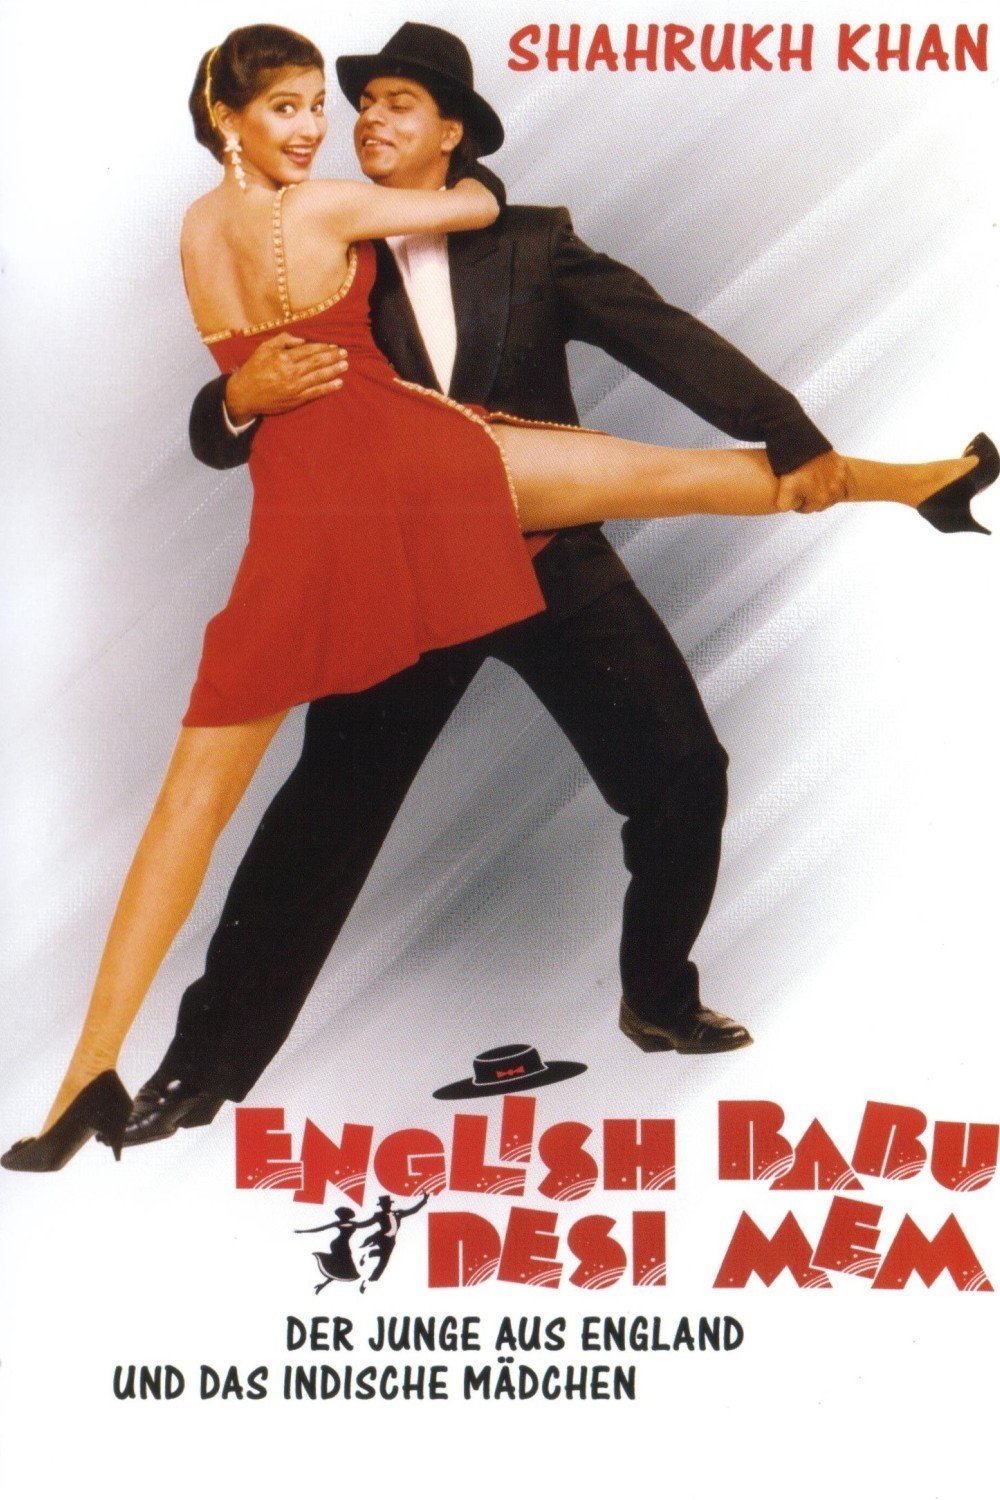 Tamil poster of the movie English Babu Desi Mem